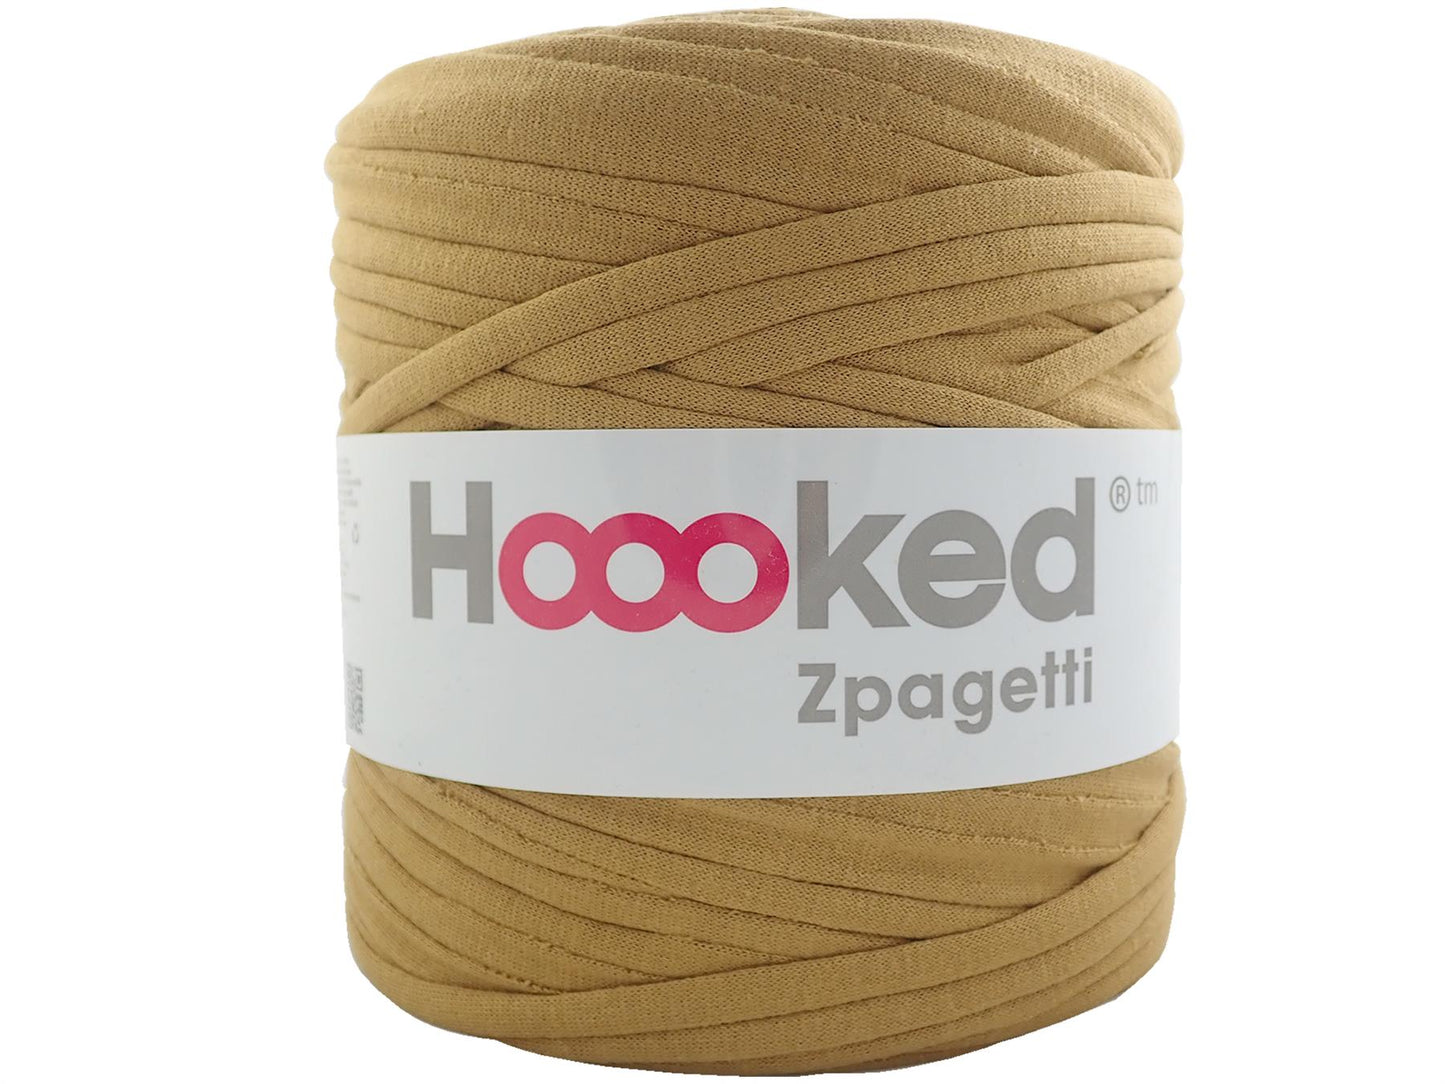 Hoooked Zpagetti Dark Ochre Cotton T-Shirt Yarn - 120M 700g